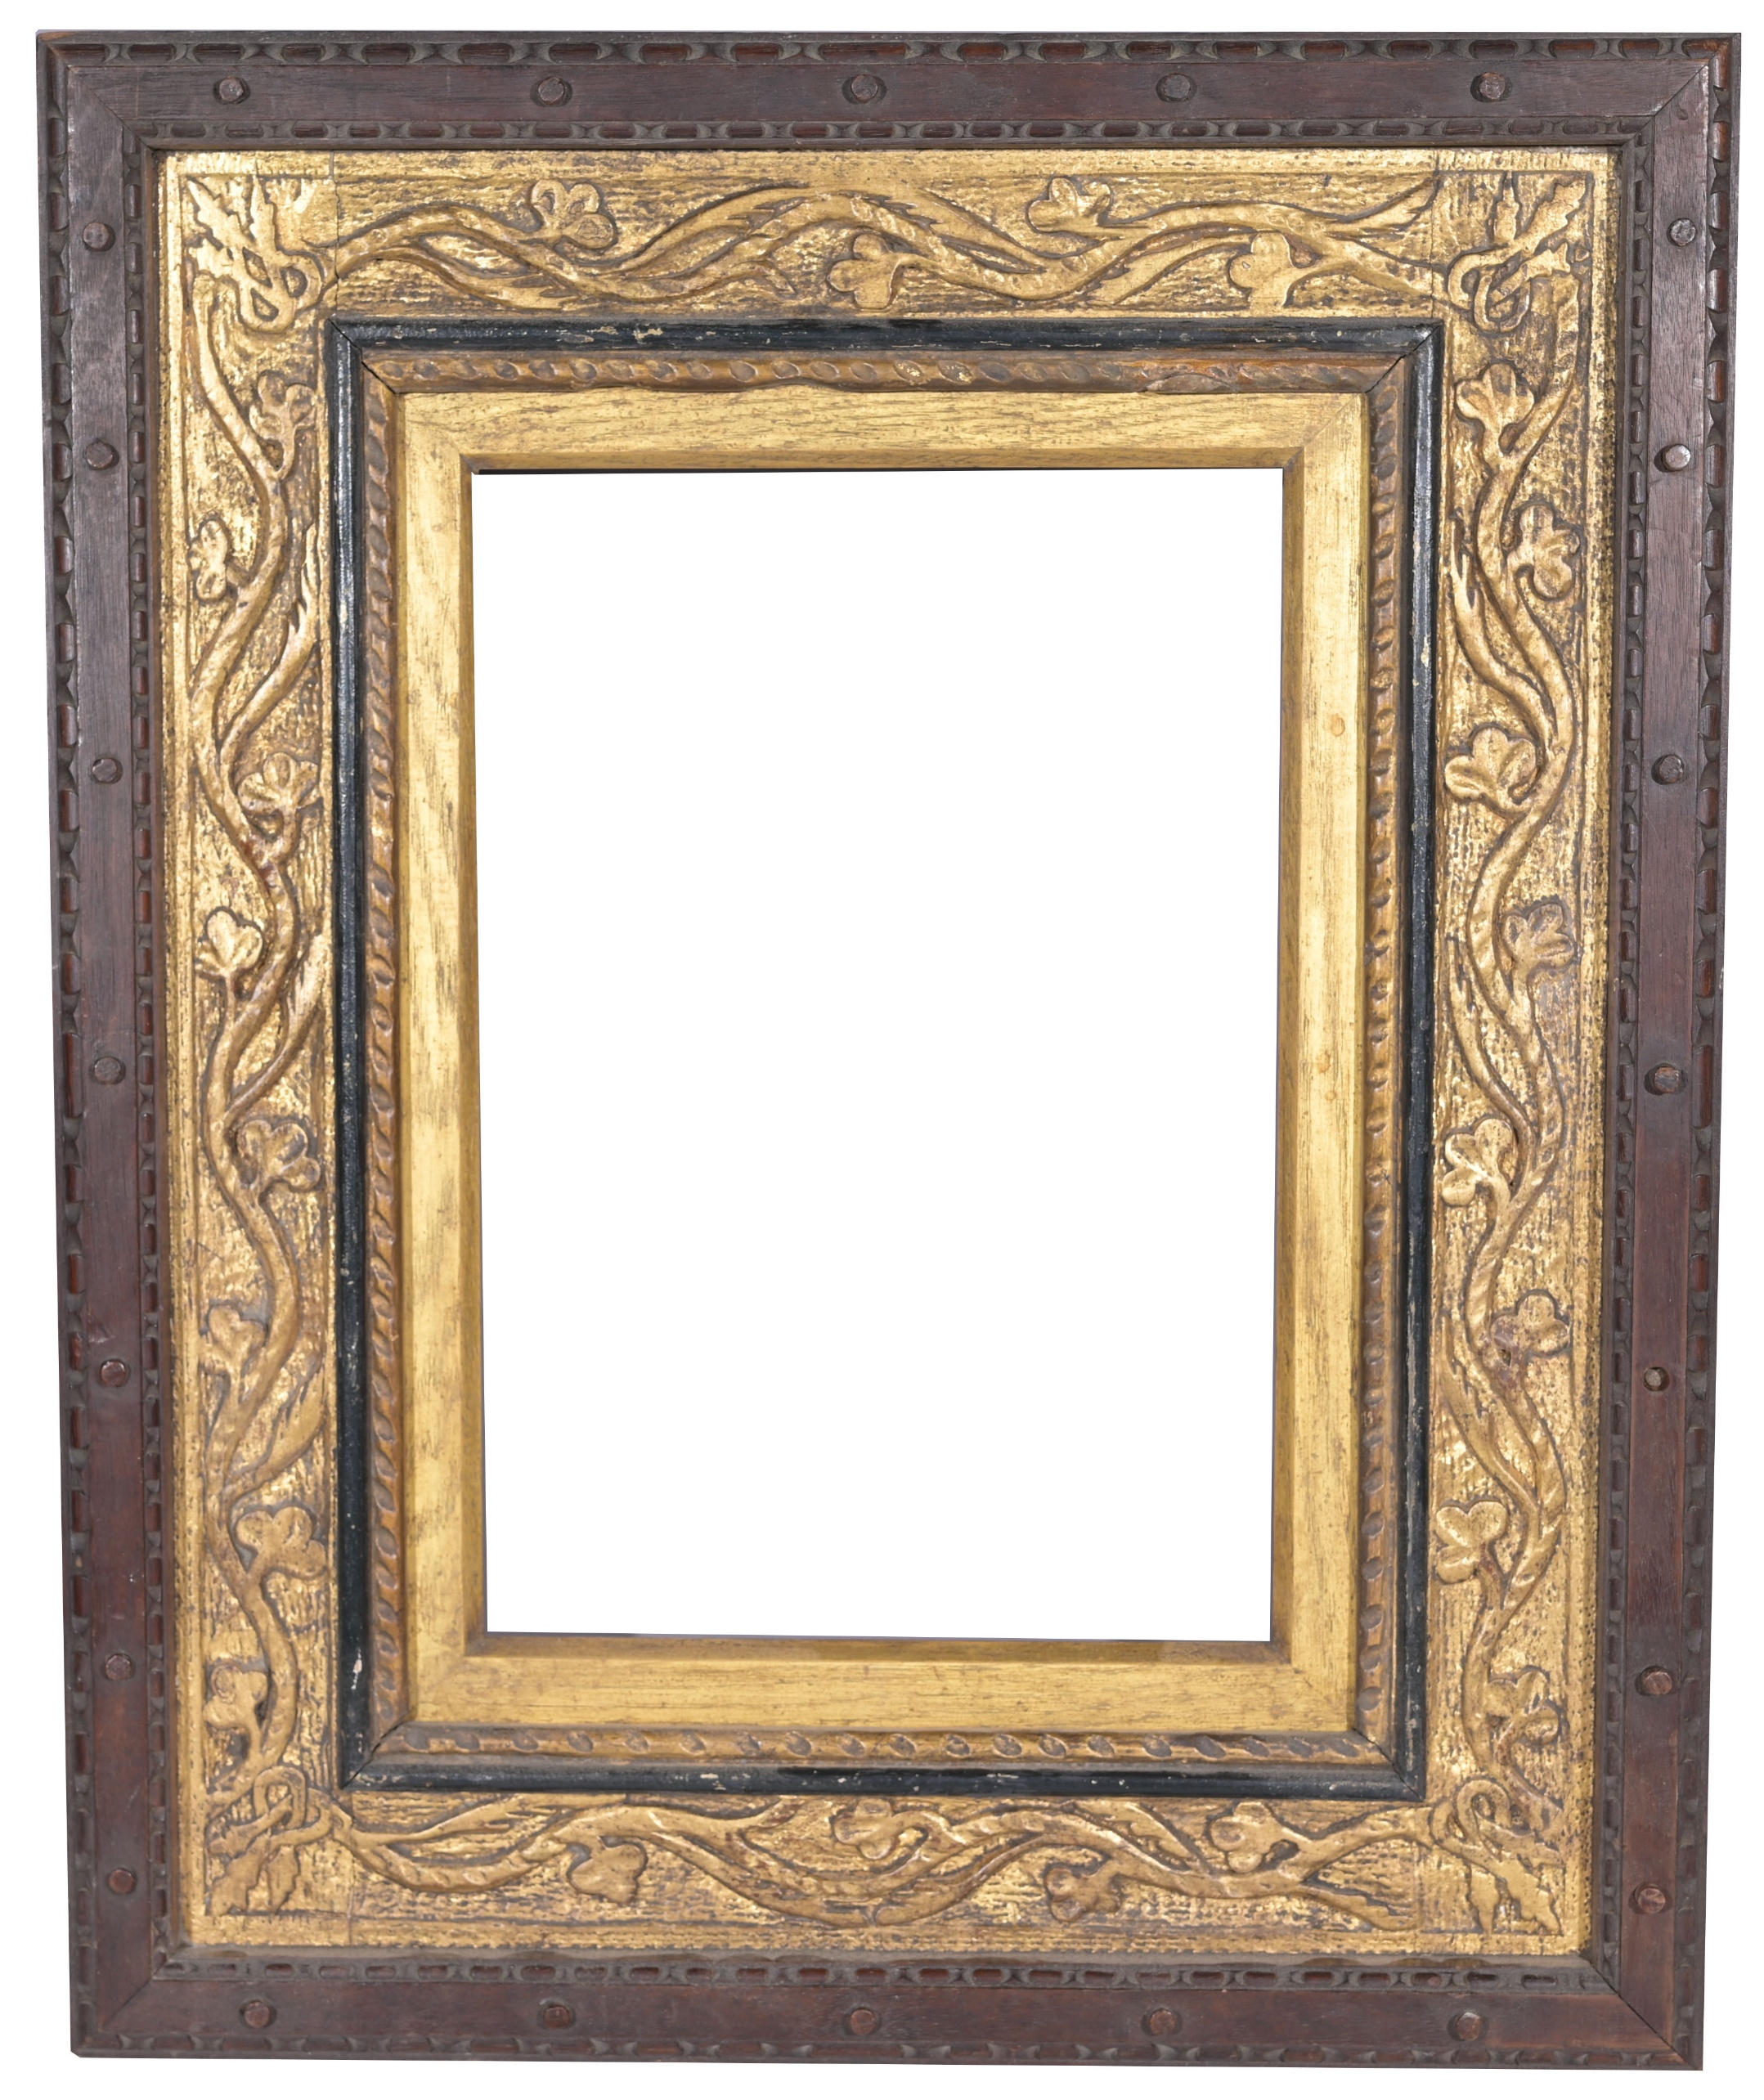 American 1880's Gilt Wood Frame - 14.5 x 10.25